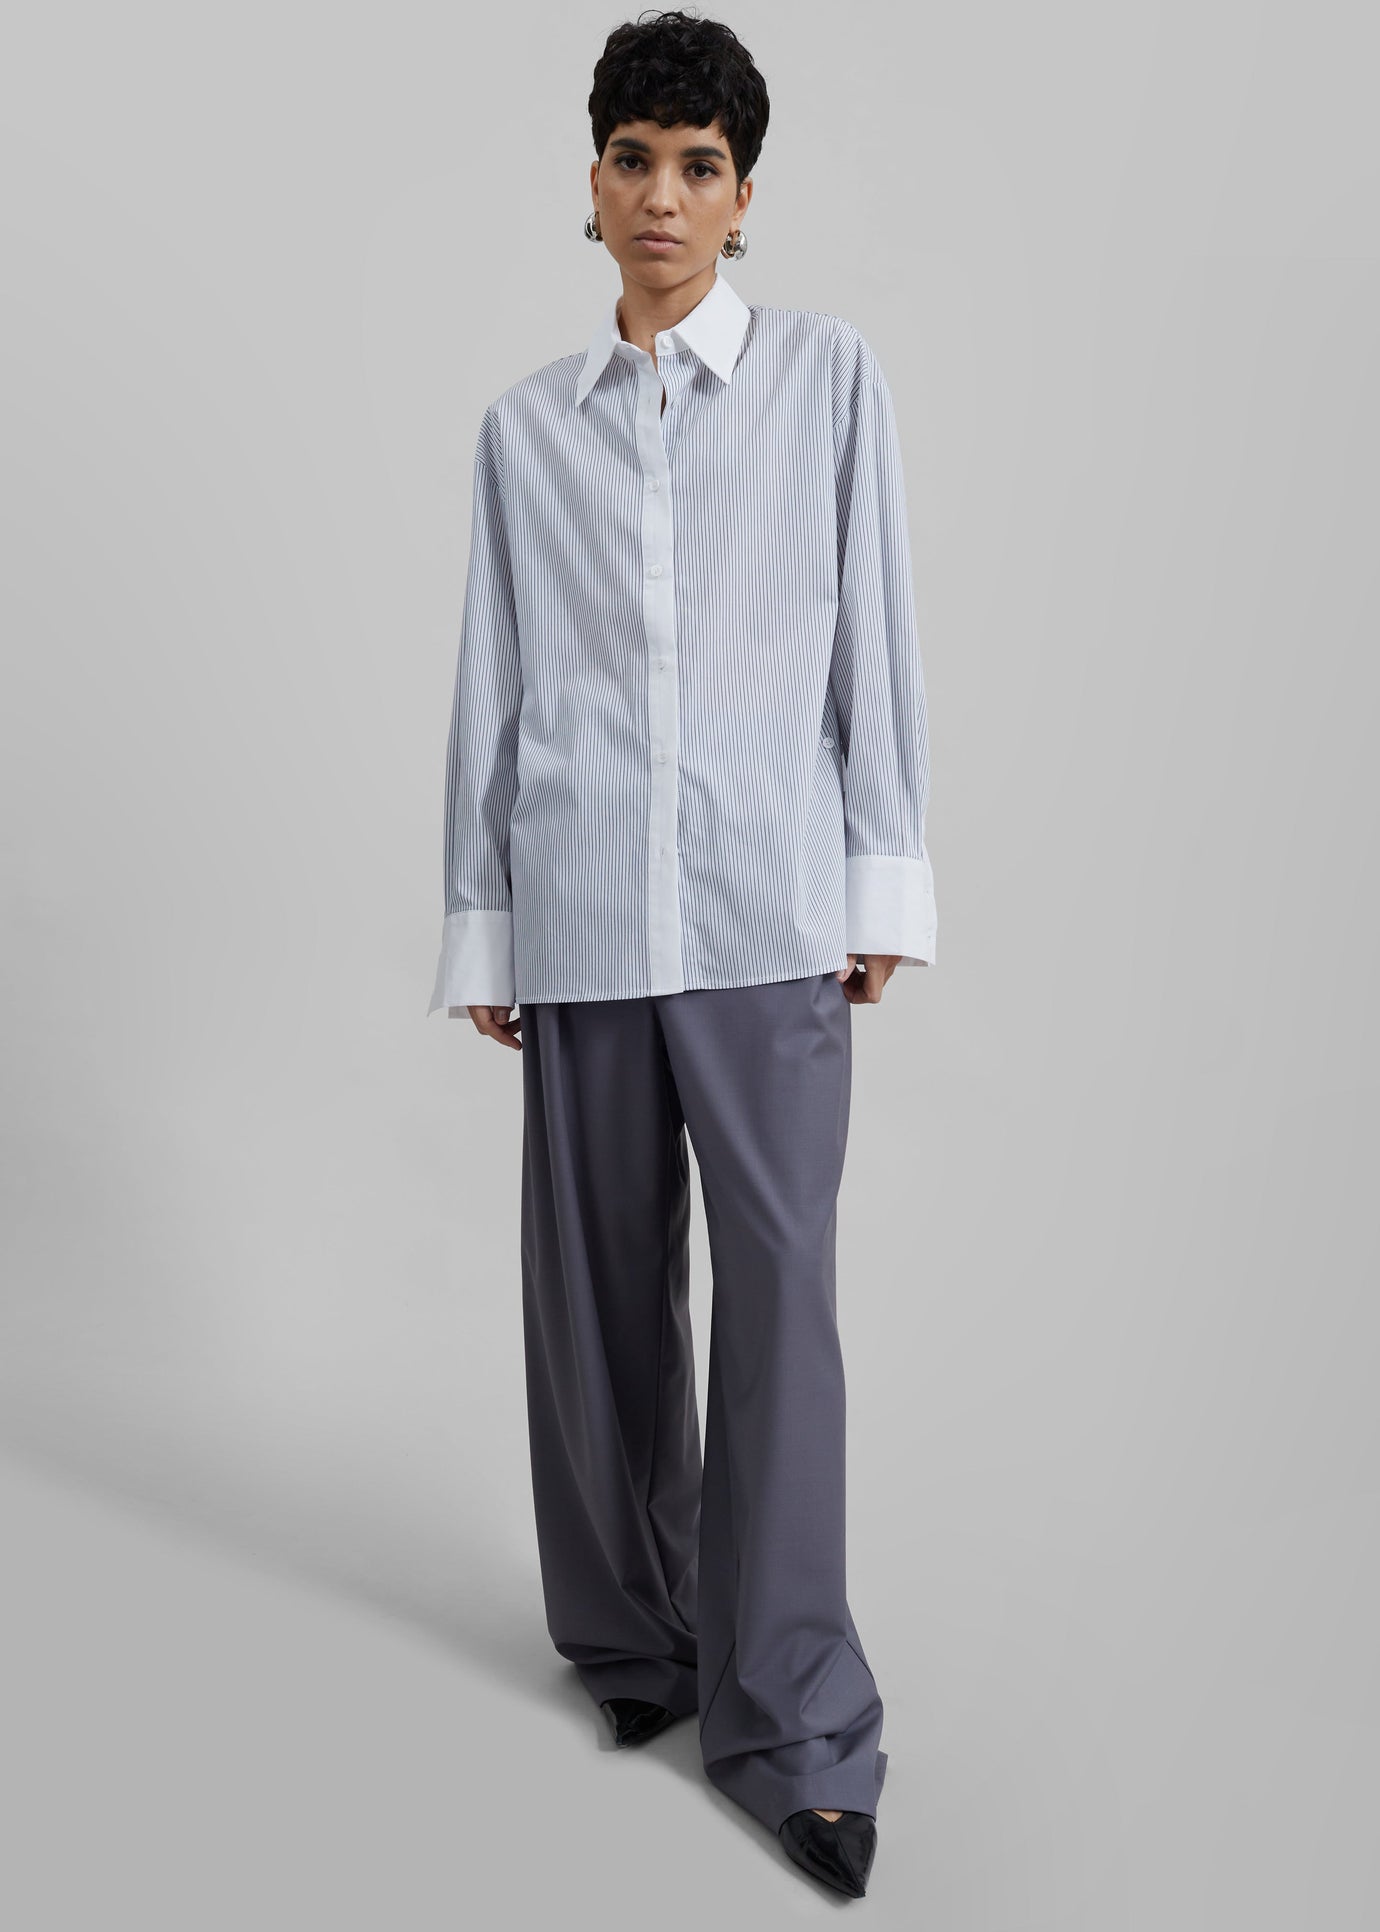 Nerina Button Up Shirt - Black/White Stripe - 1